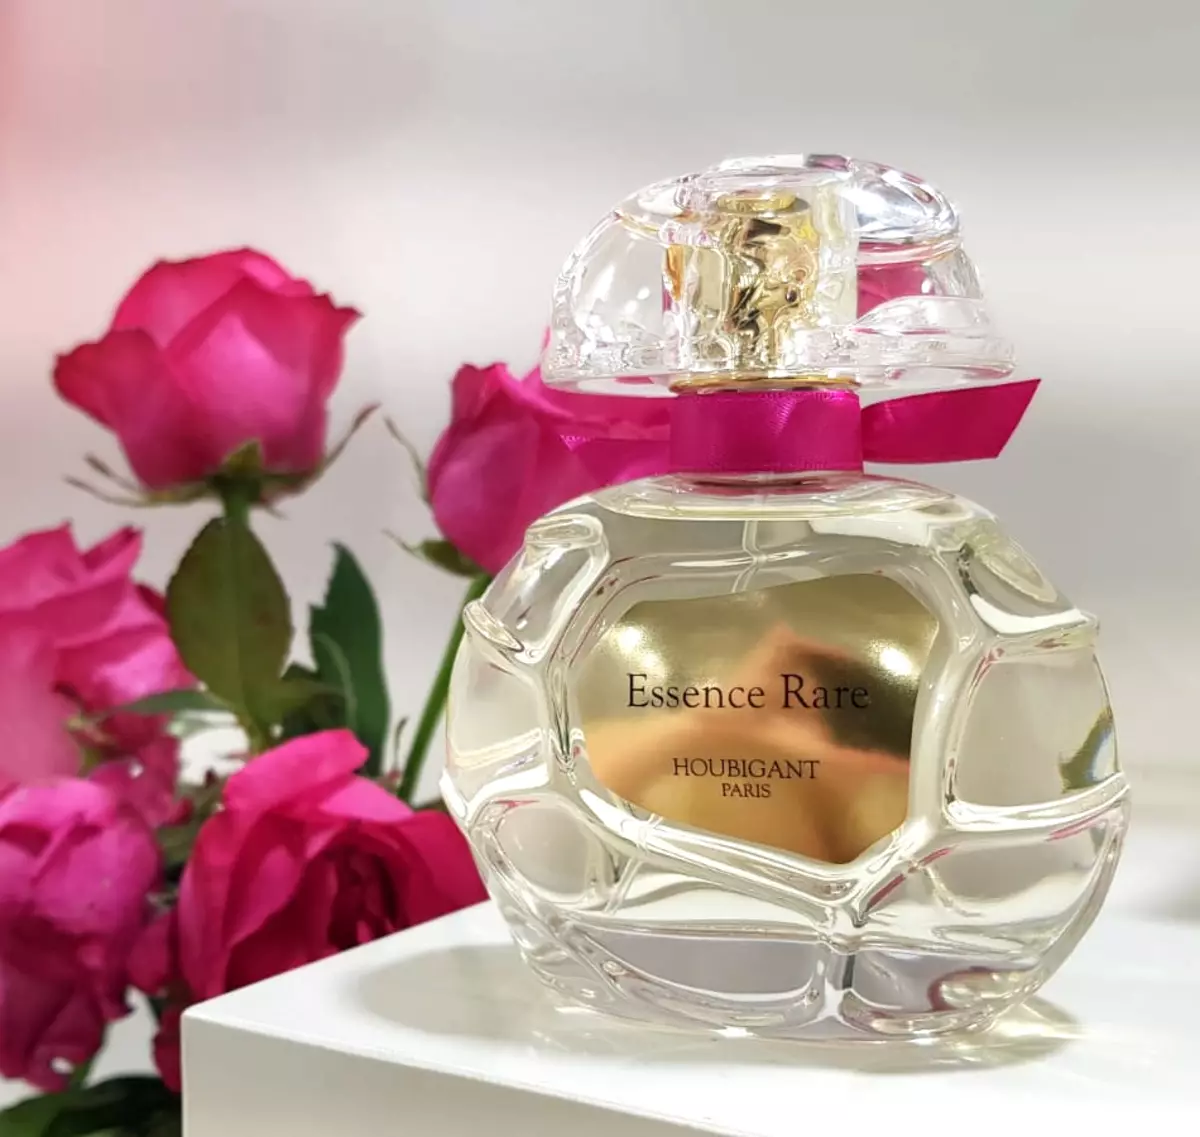 Houbigant perfum: Quelques Fleurs Royale i poques essència, Orangers en fleurs i Iris des Champs, fougère ROYALE i Colònia intens, APERCU i altres sabors 25165_3